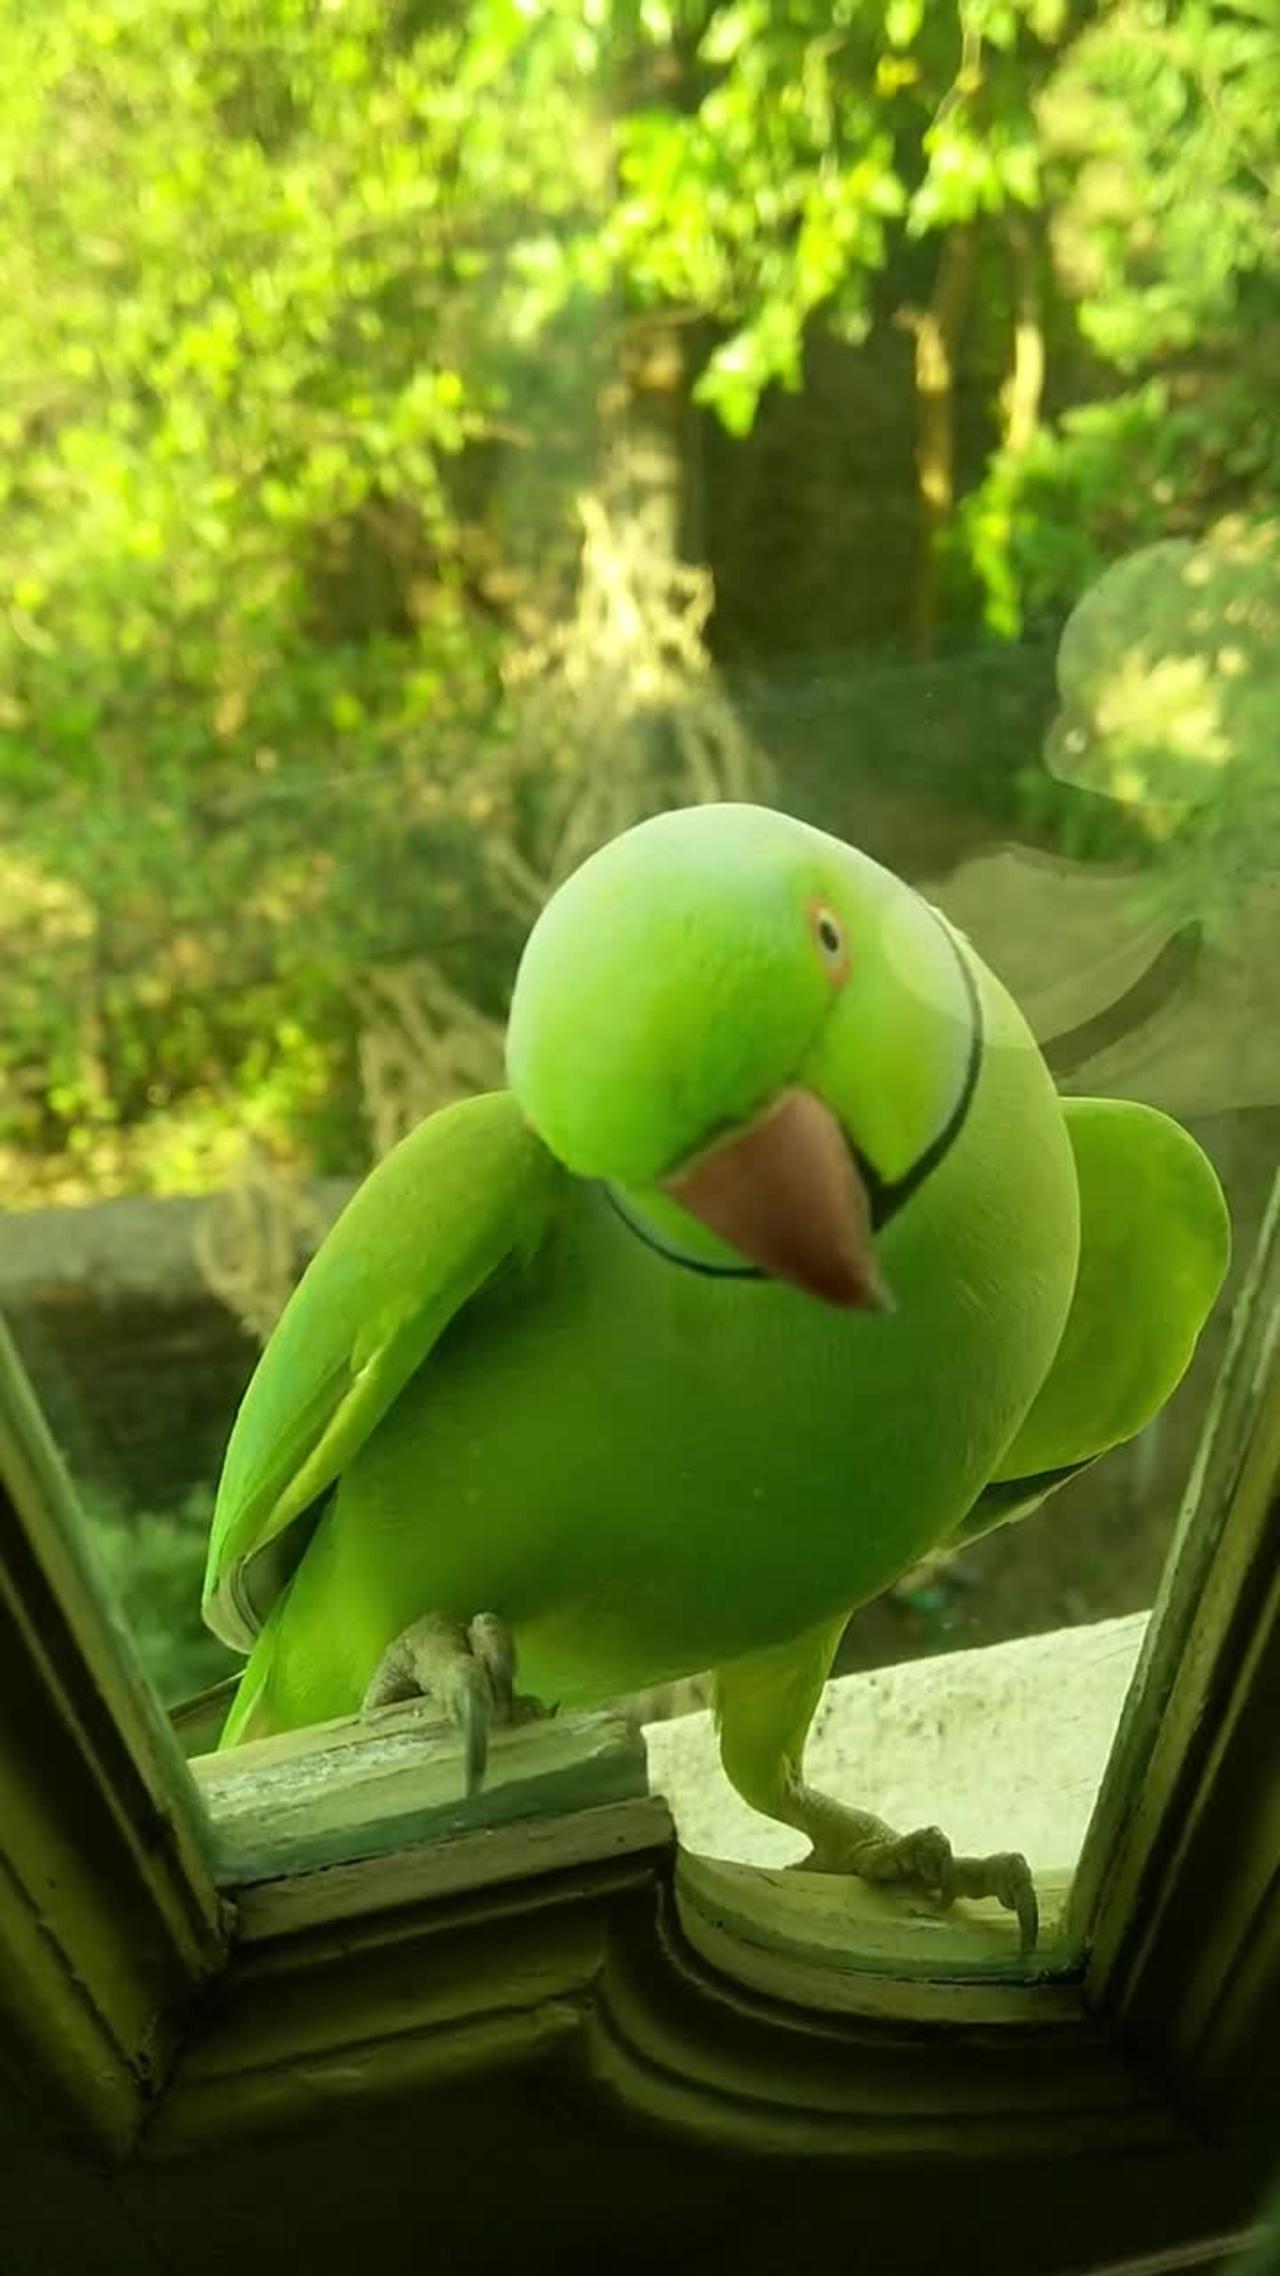 Cute parrot